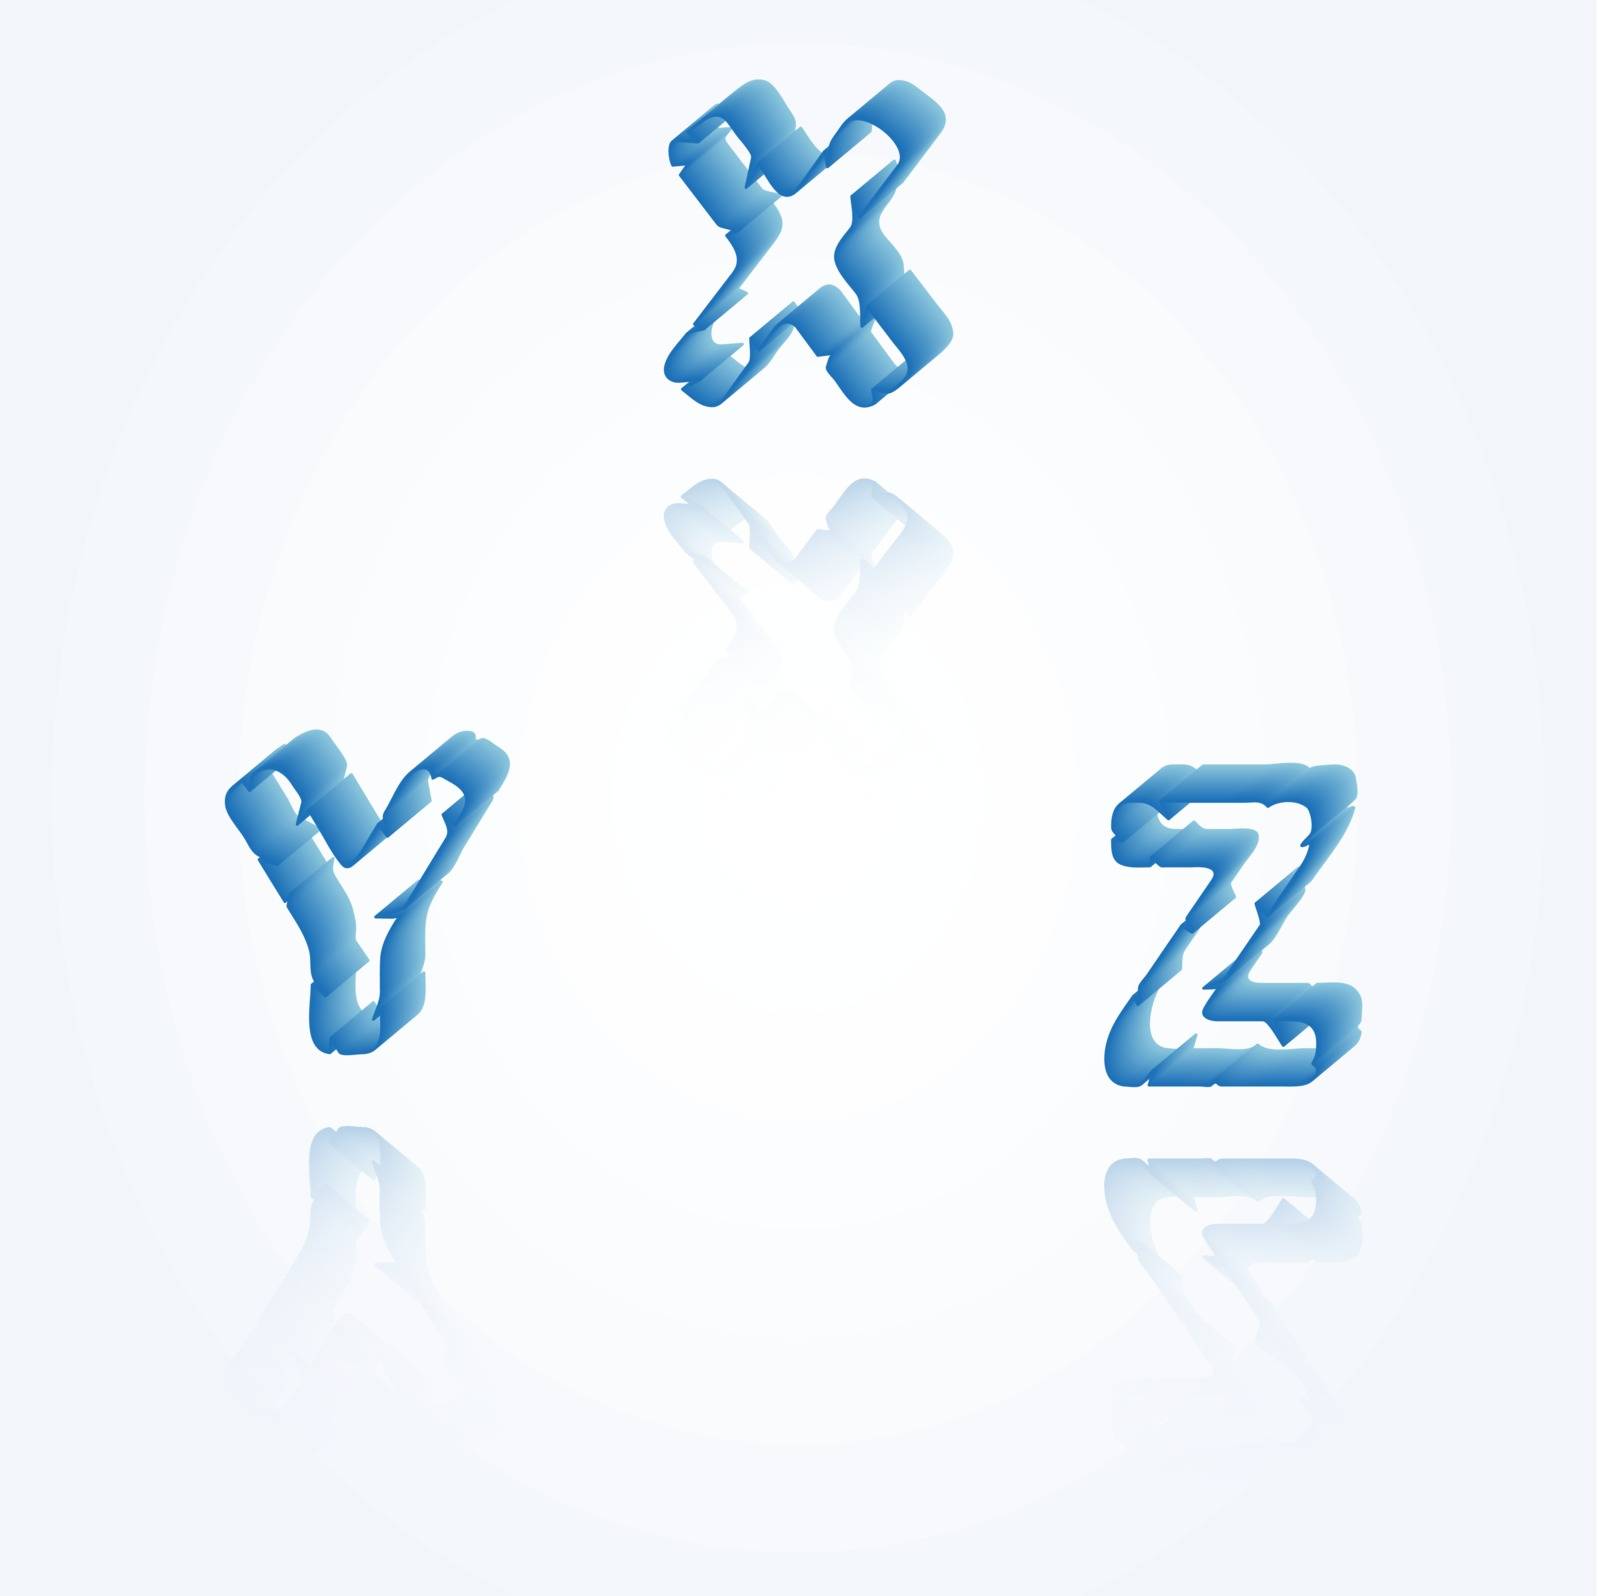 sketch jagged alphabet letters, X, Y, Z by muuraa